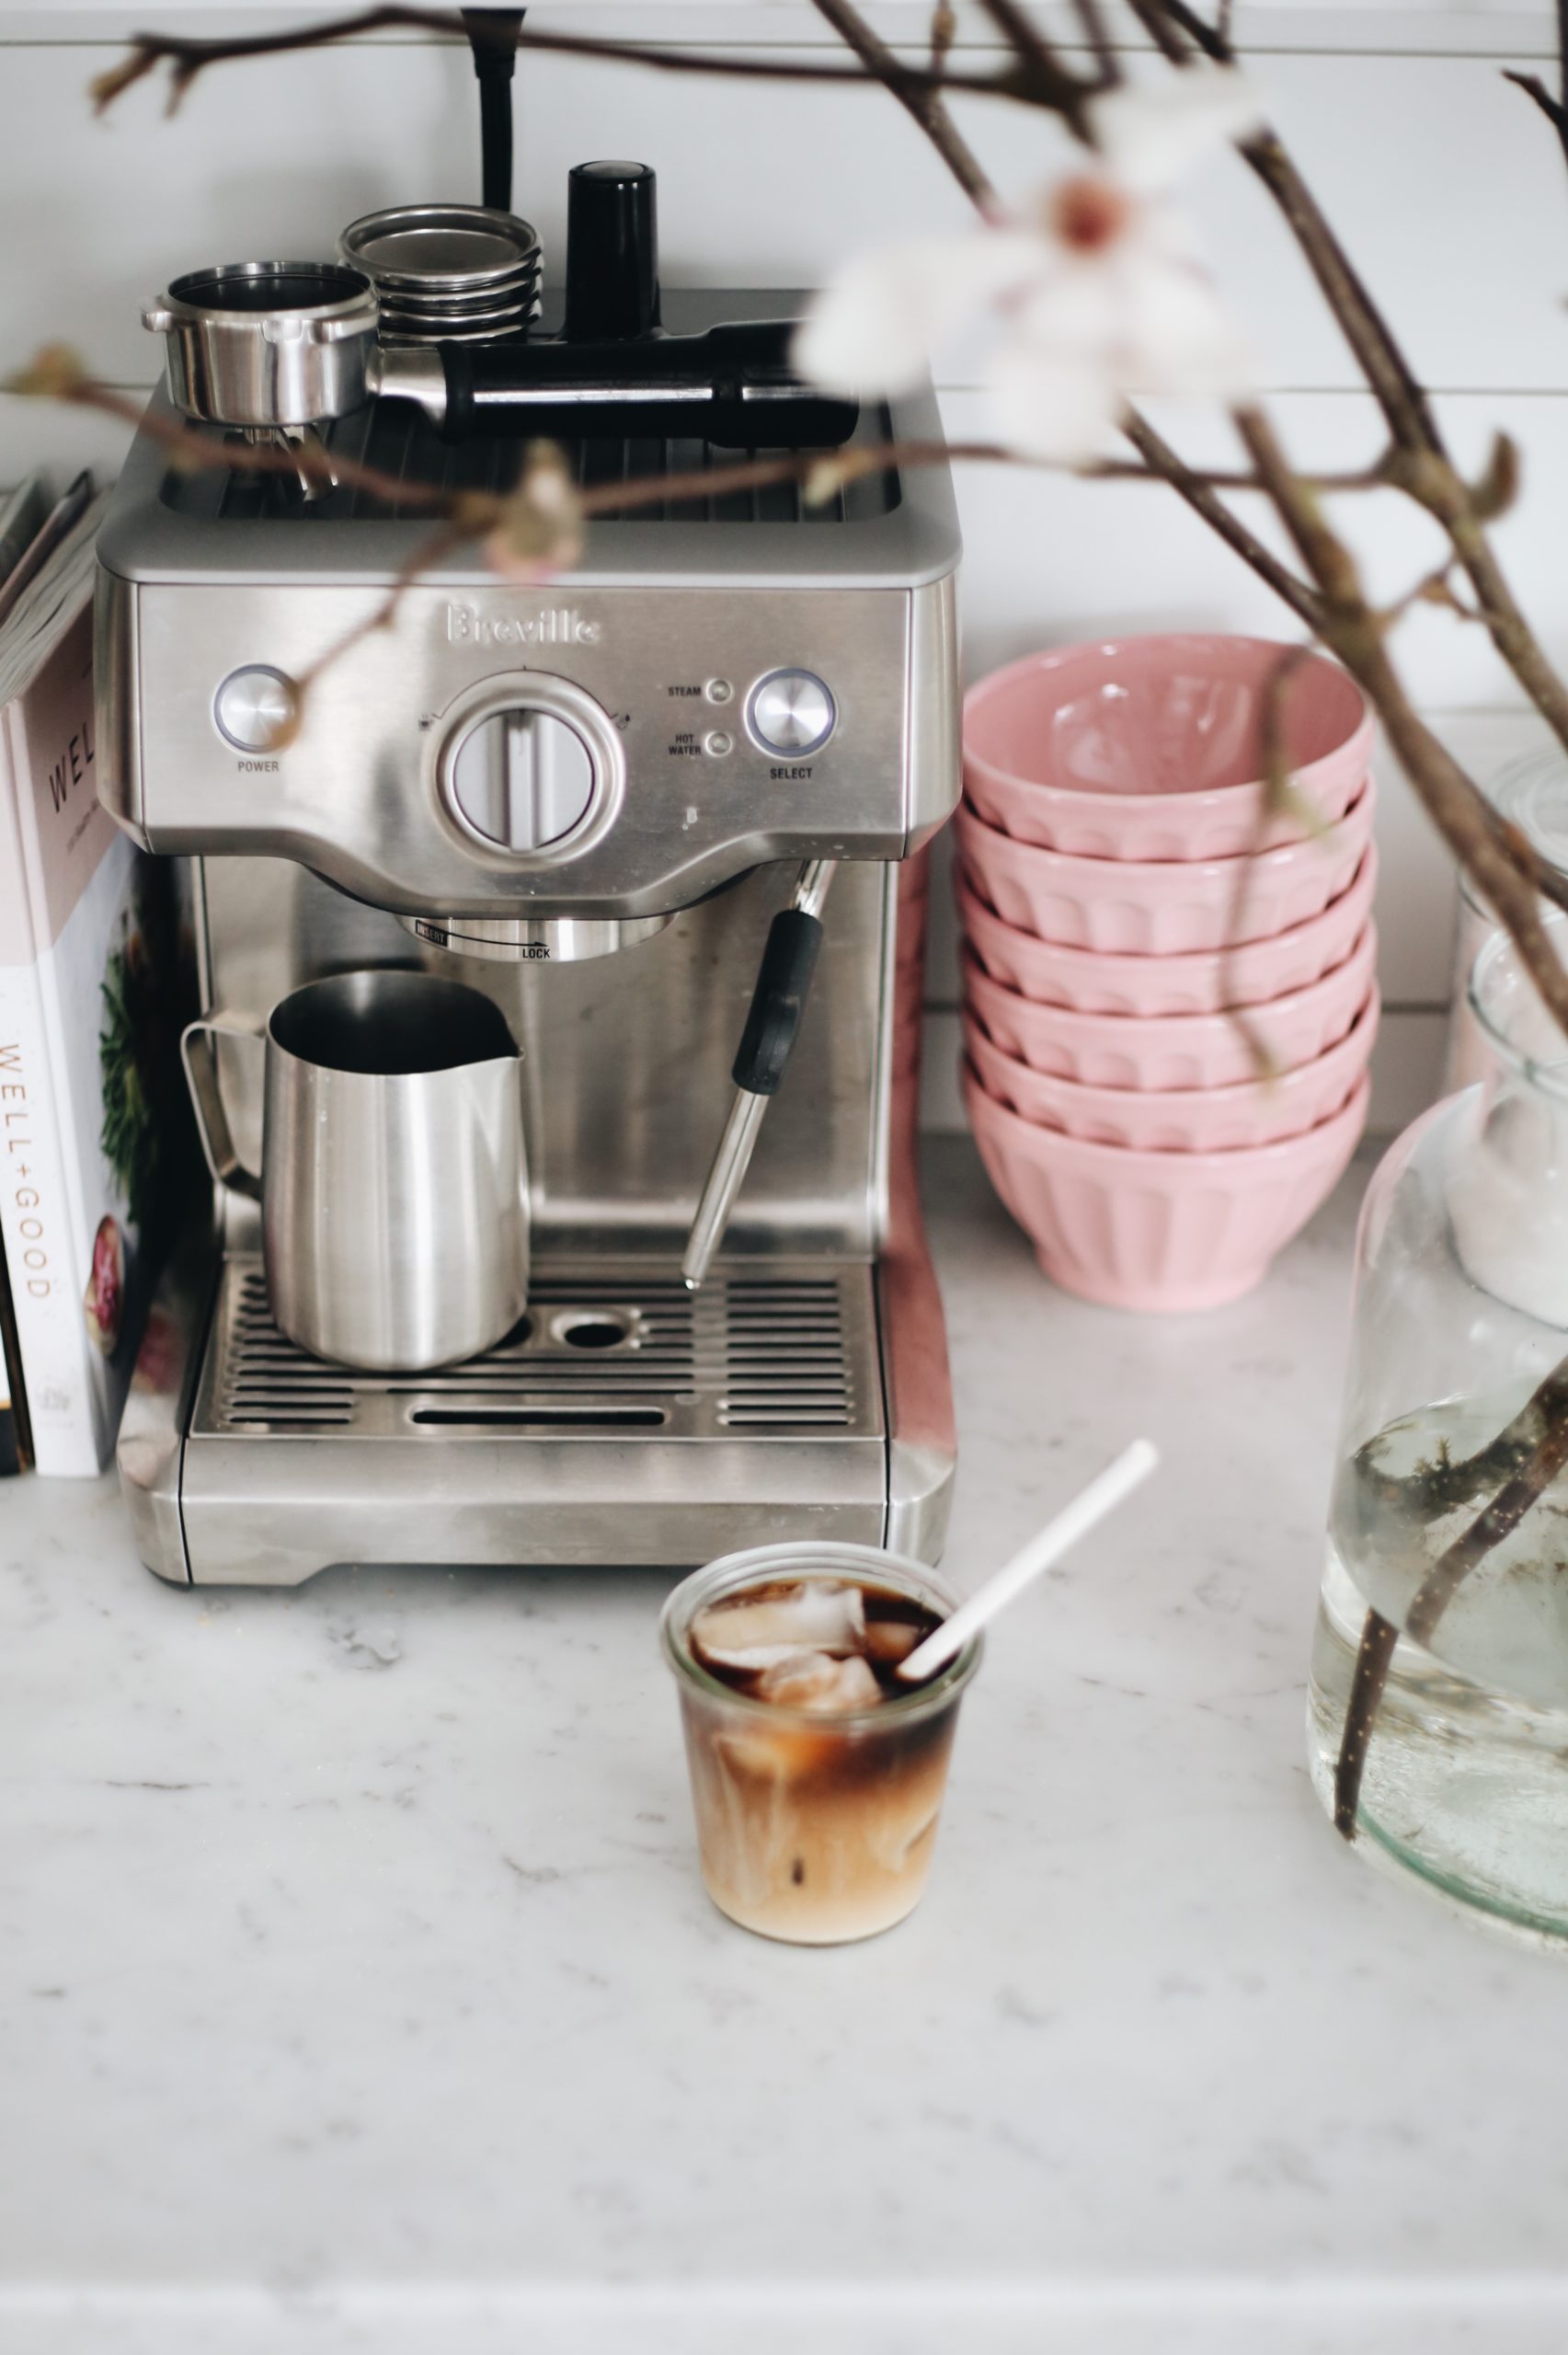 Iced Coffee Machine Recipes